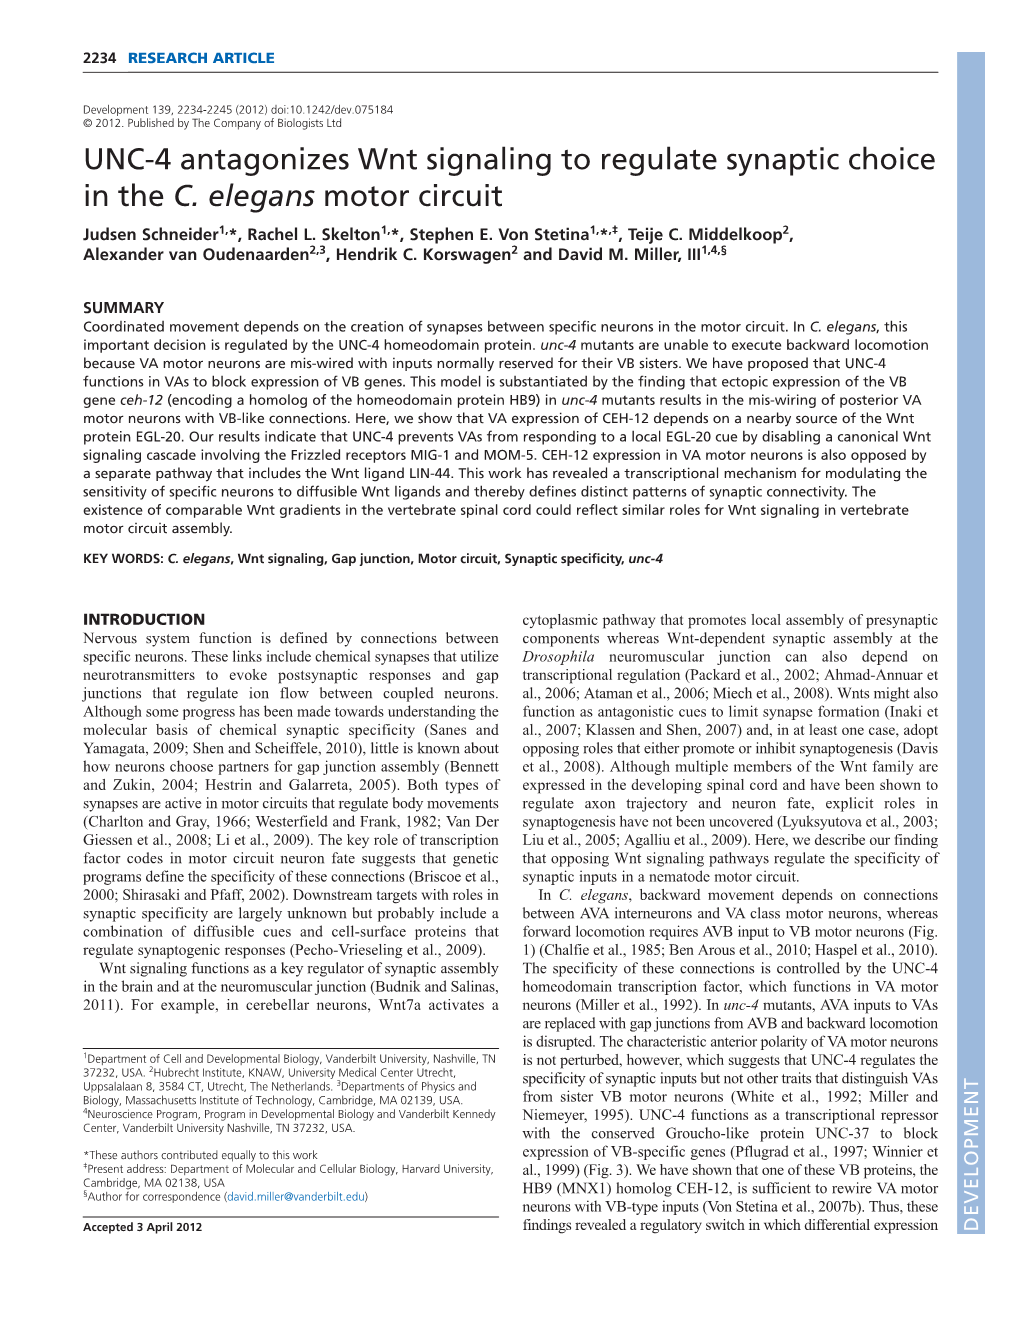 UNC-4 Antagonizes Wnt Signaling to Regulate Synaptic Choice in the C. Elegans Motor Circuit Judsen Schneider1,*, Rachel L